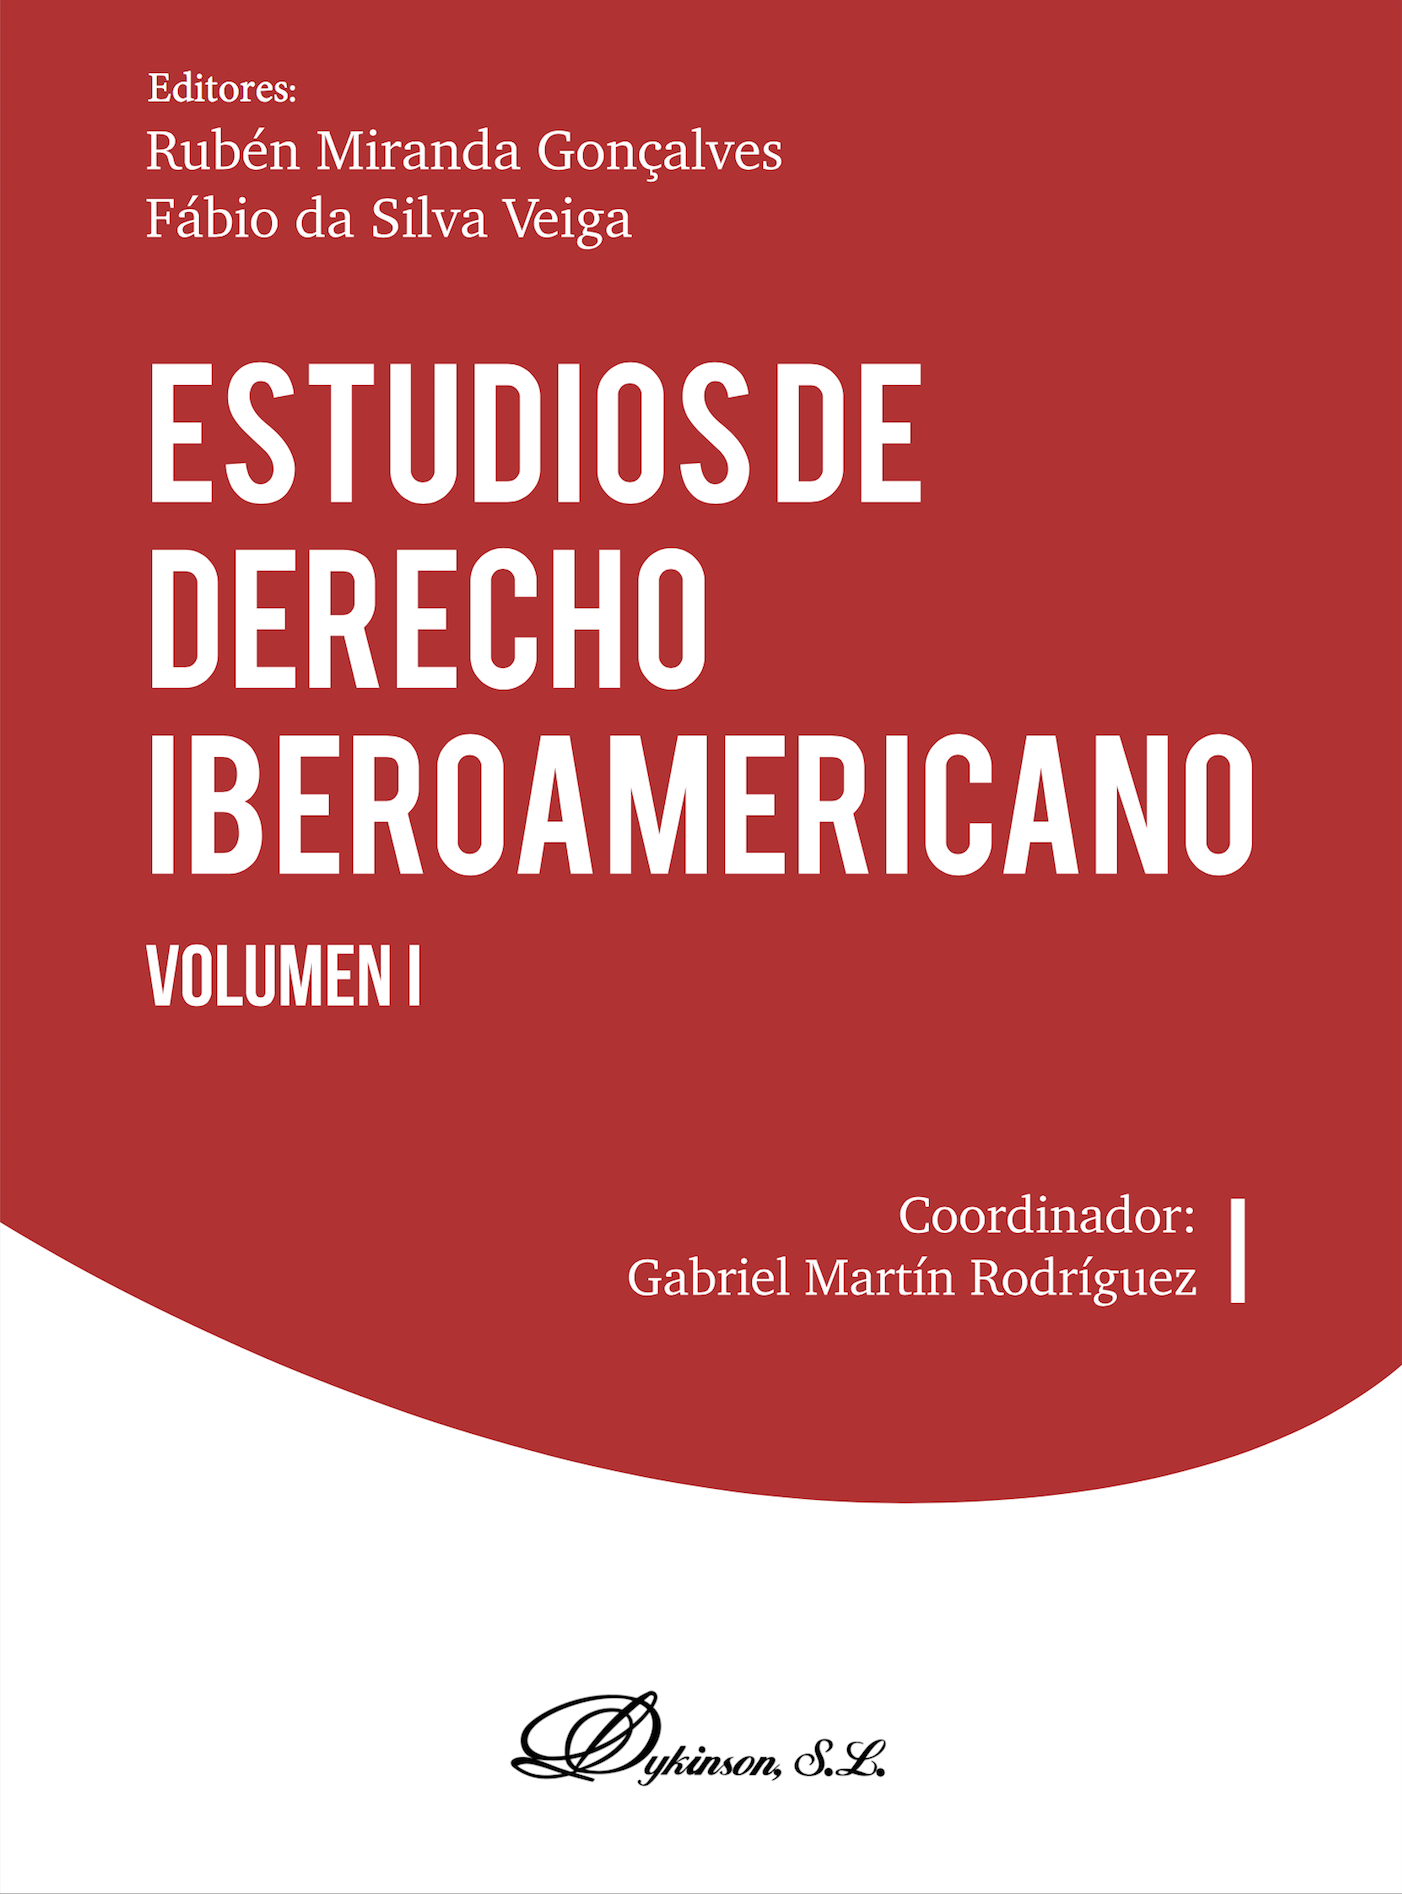 Imagen de portada del libro Estudios de derecho iberoamericano. Vol. I